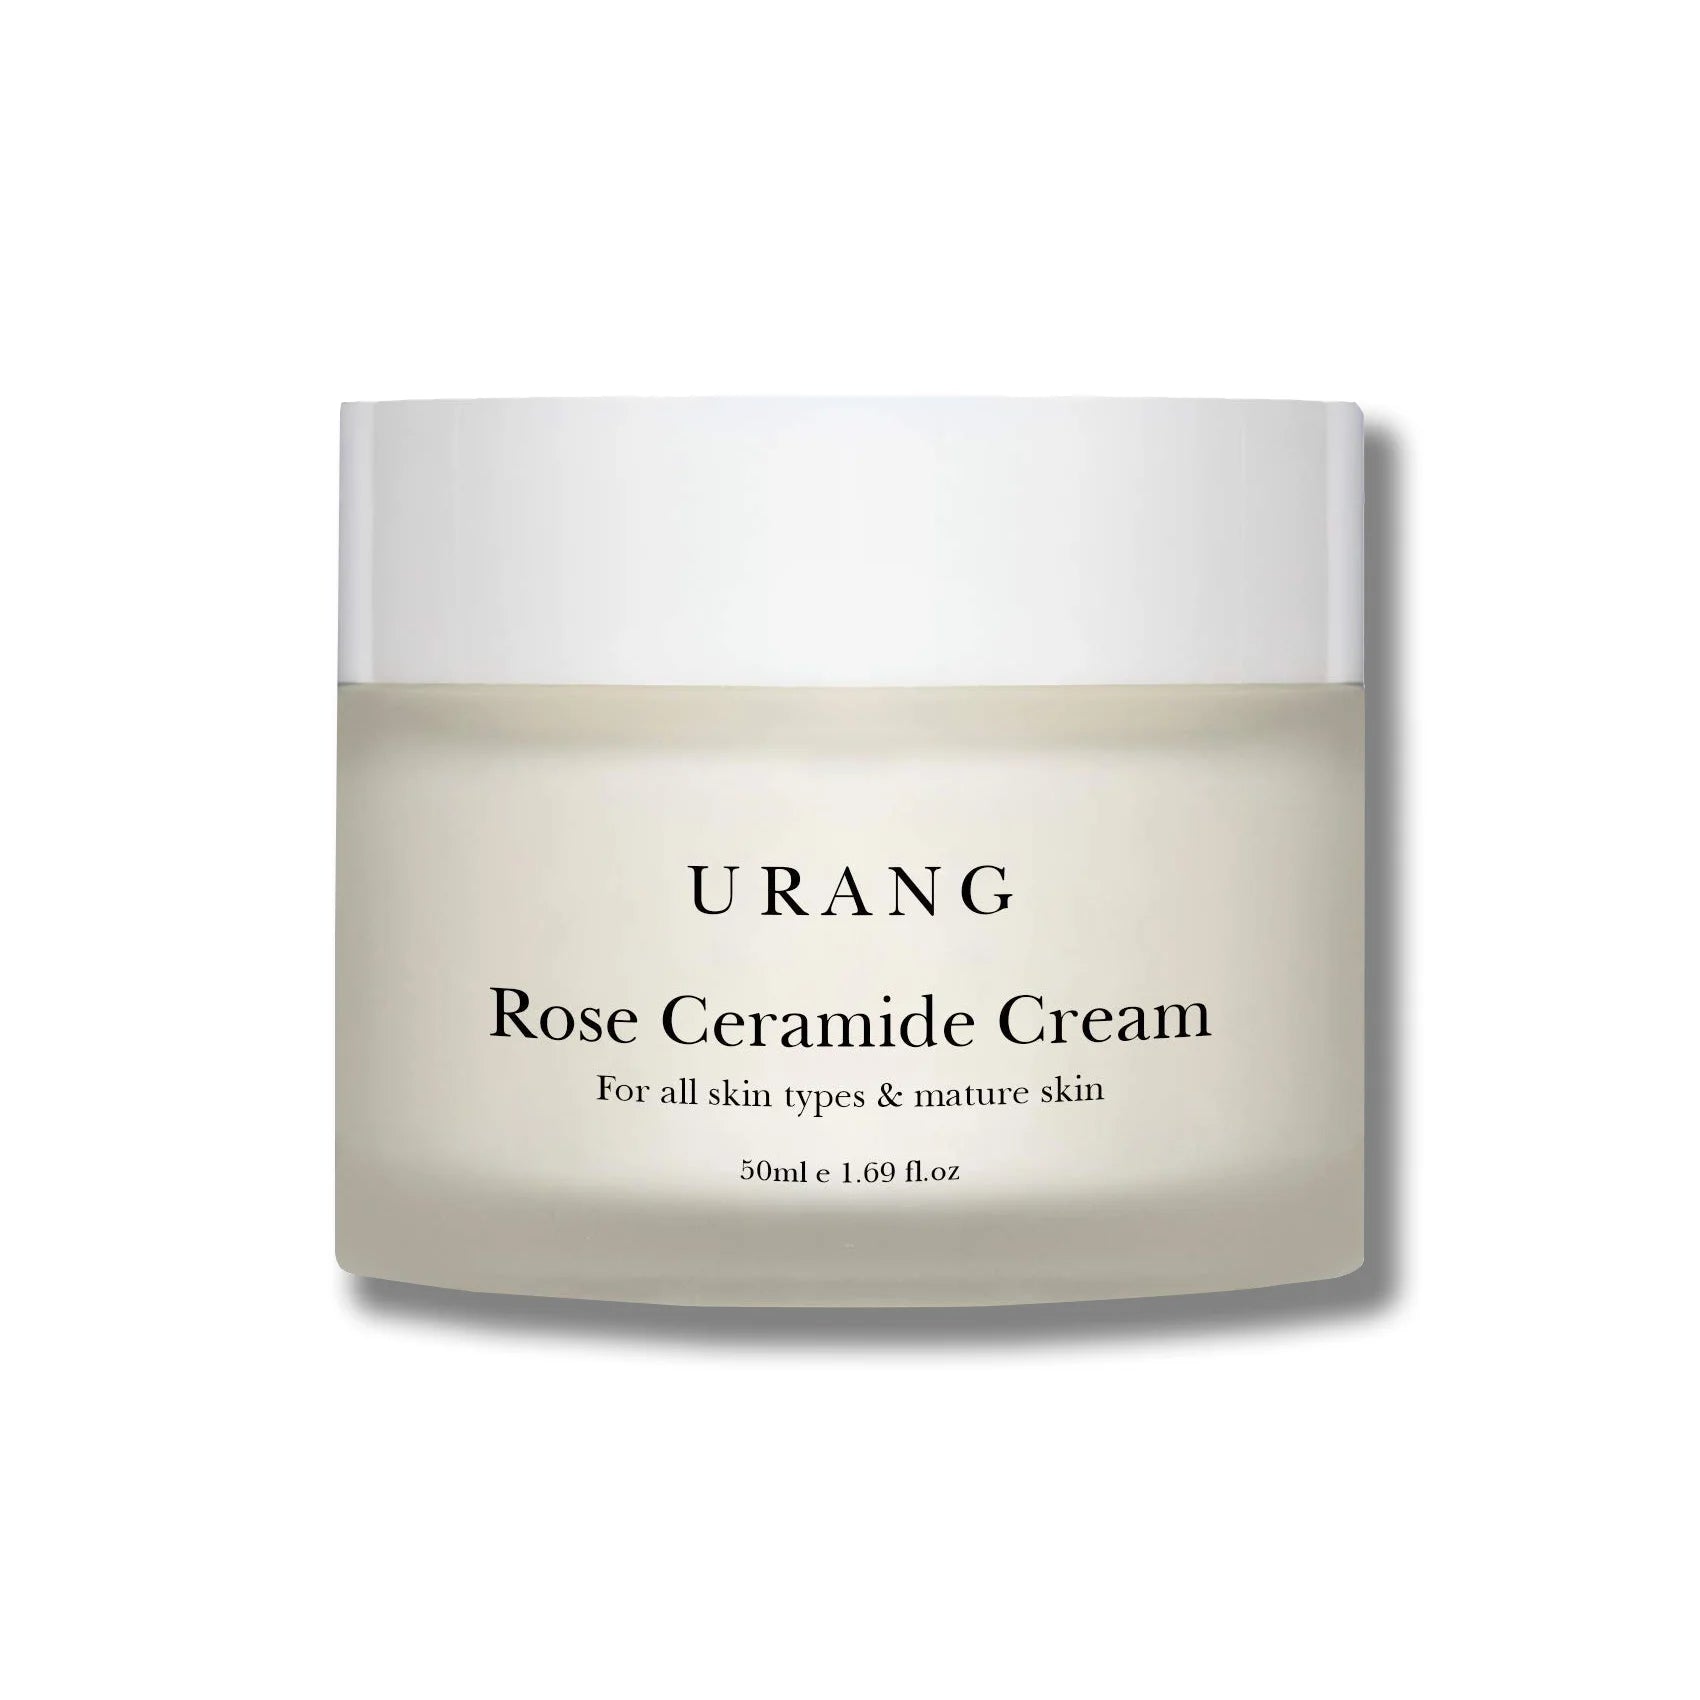 Urang Rose Ceramide Cream face Korean cosmetics vegan natural best face care moisturizer K Beauty World